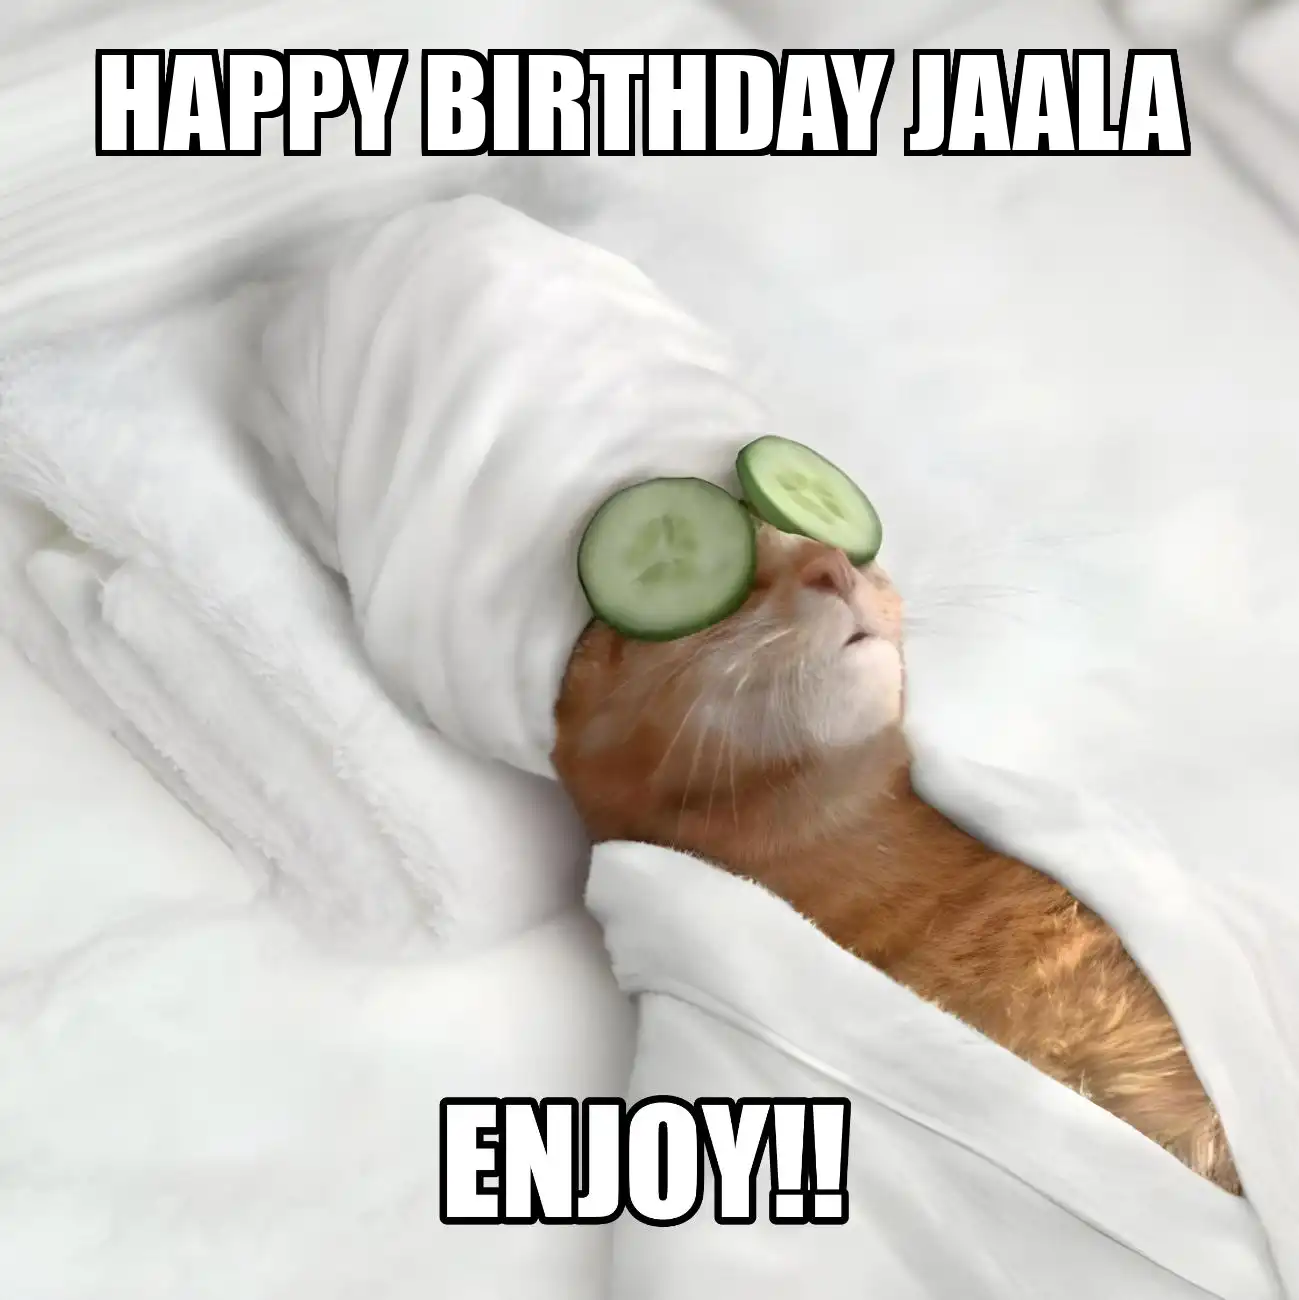 Happy Birthday Jaala Enjoy Cat Meme